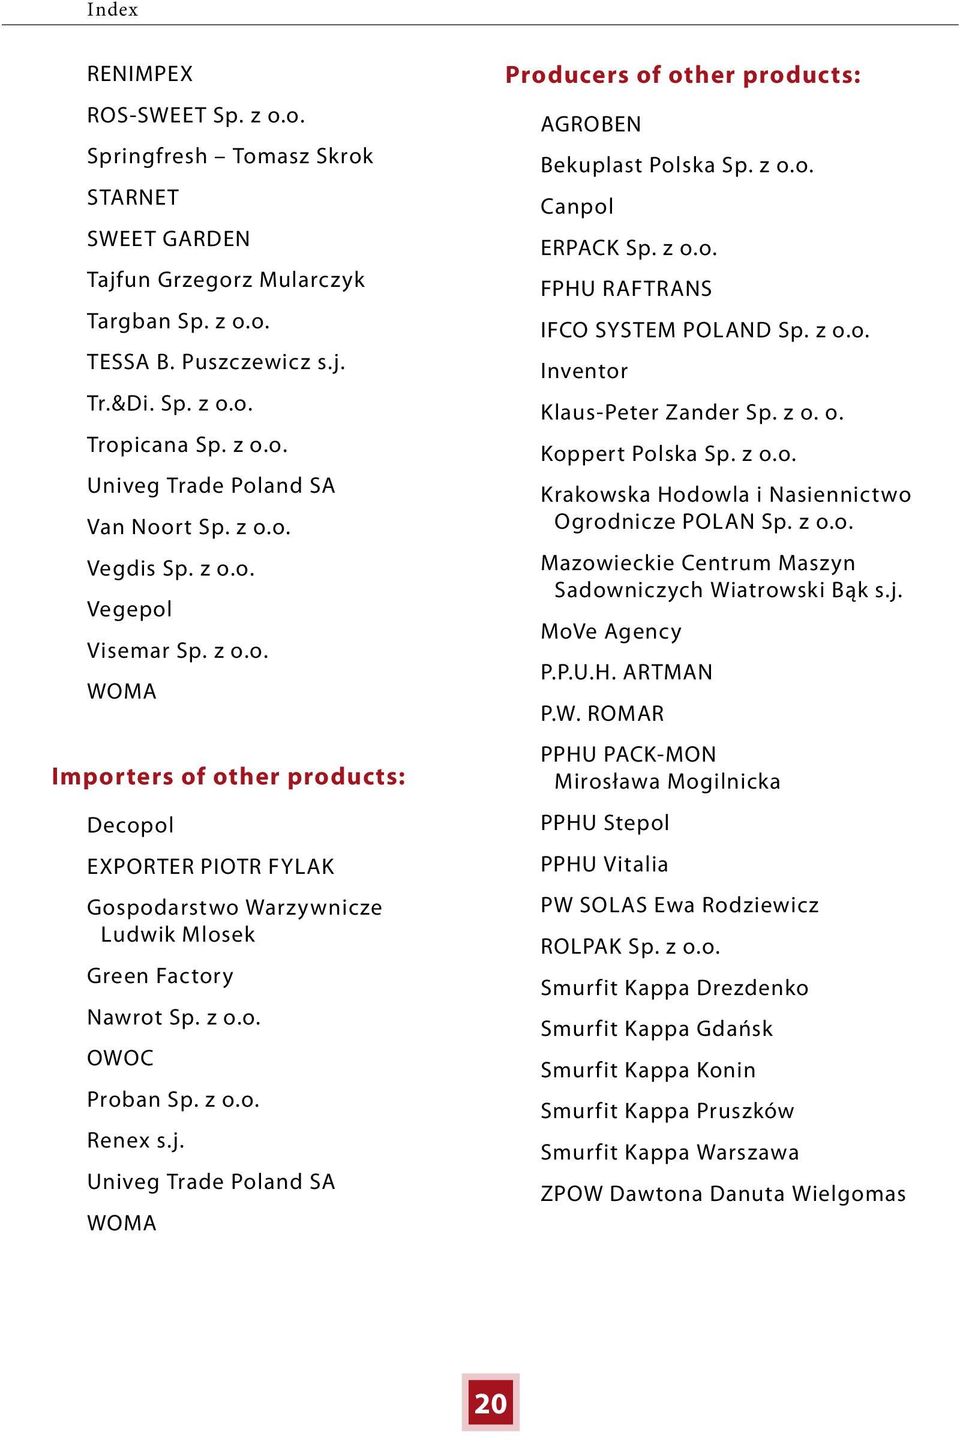 z o.o. Renex s.j. Univeg Trade Poland SA WOMA Producers of other products: AGROBEN Bekuplast Polska Sp. z o.o. Canpol ERPACK Sp. z o.o. FPHU RAFTRANS IFCO SYSTEM POLAND Sp. z o.o. Inventor Klaus-Peter Zander Sp.